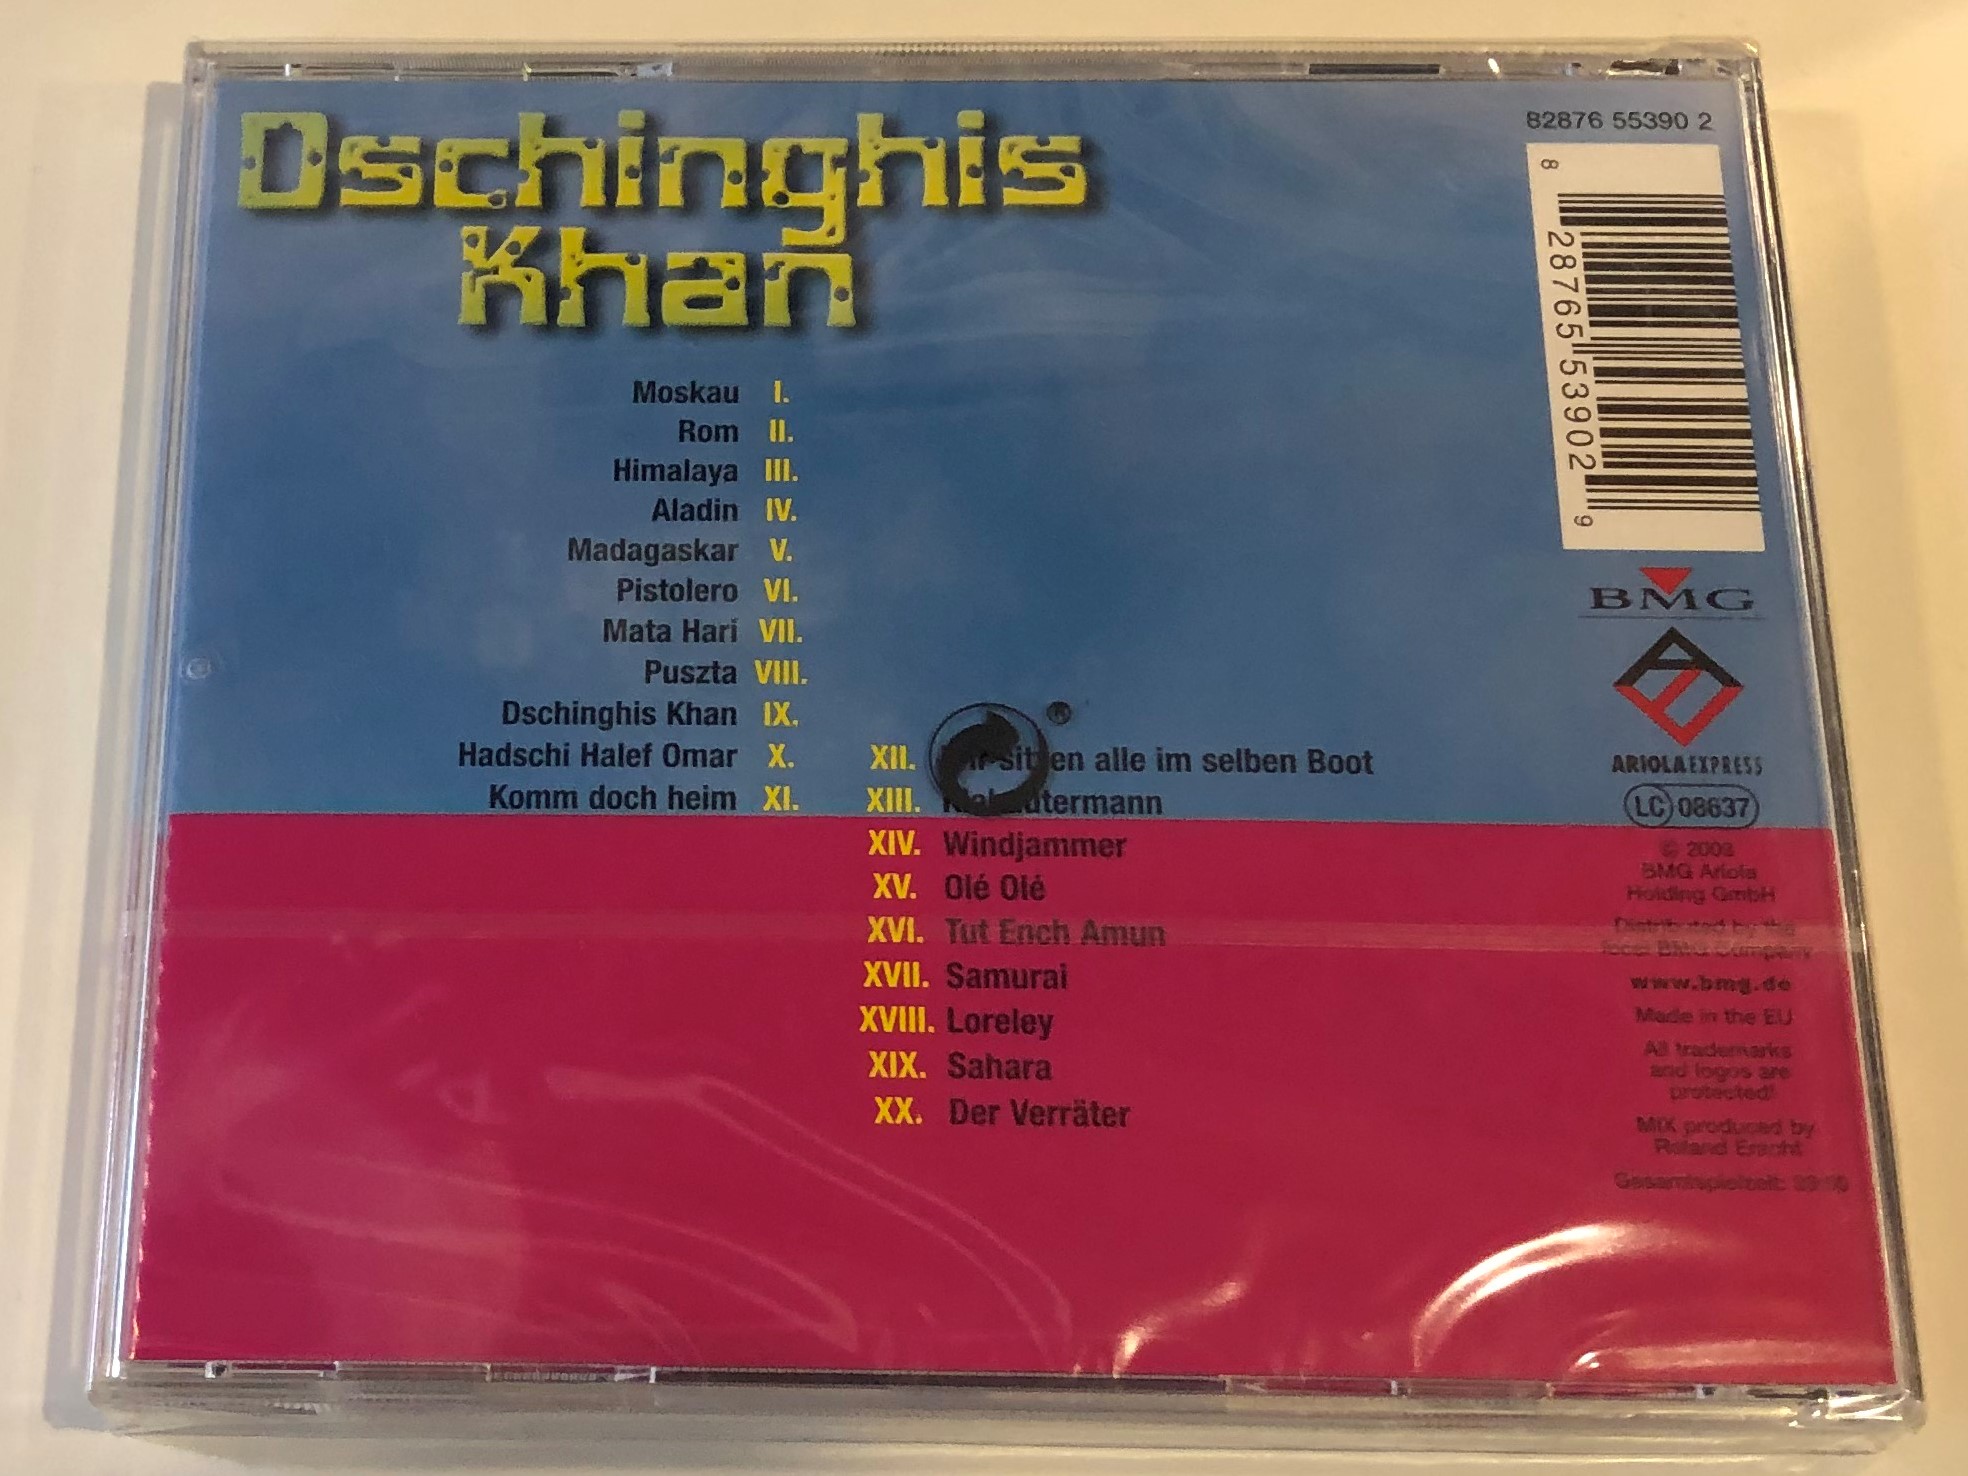 dschinghis-khan-in-the-mix-der-super-mix-des-schiagers-bmg-ariola-holding-audio-cd-2008-82876-55390-2-2-.jpg